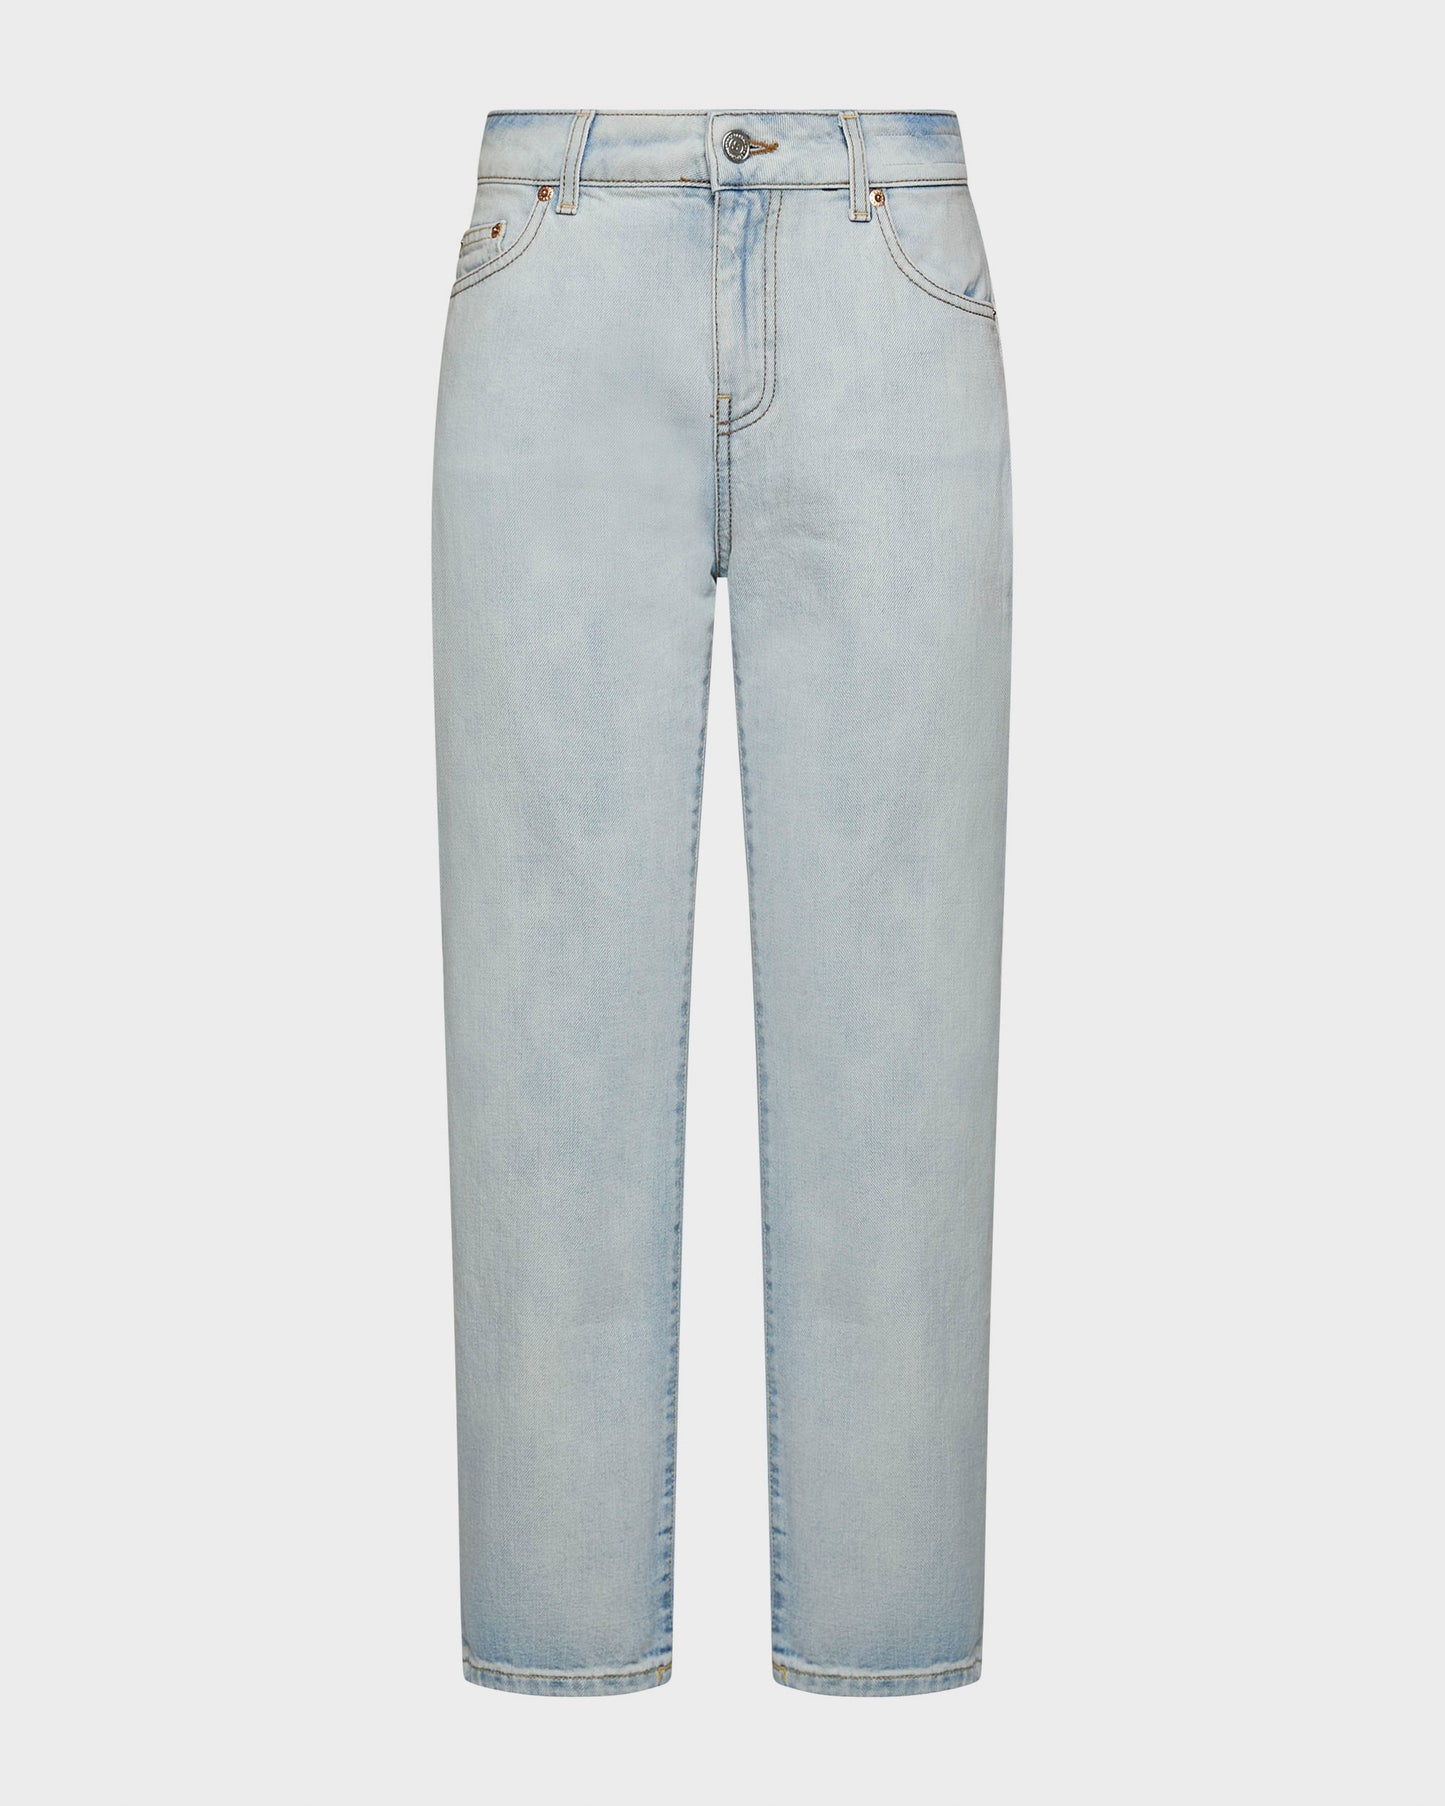 Adid jeans regular crop